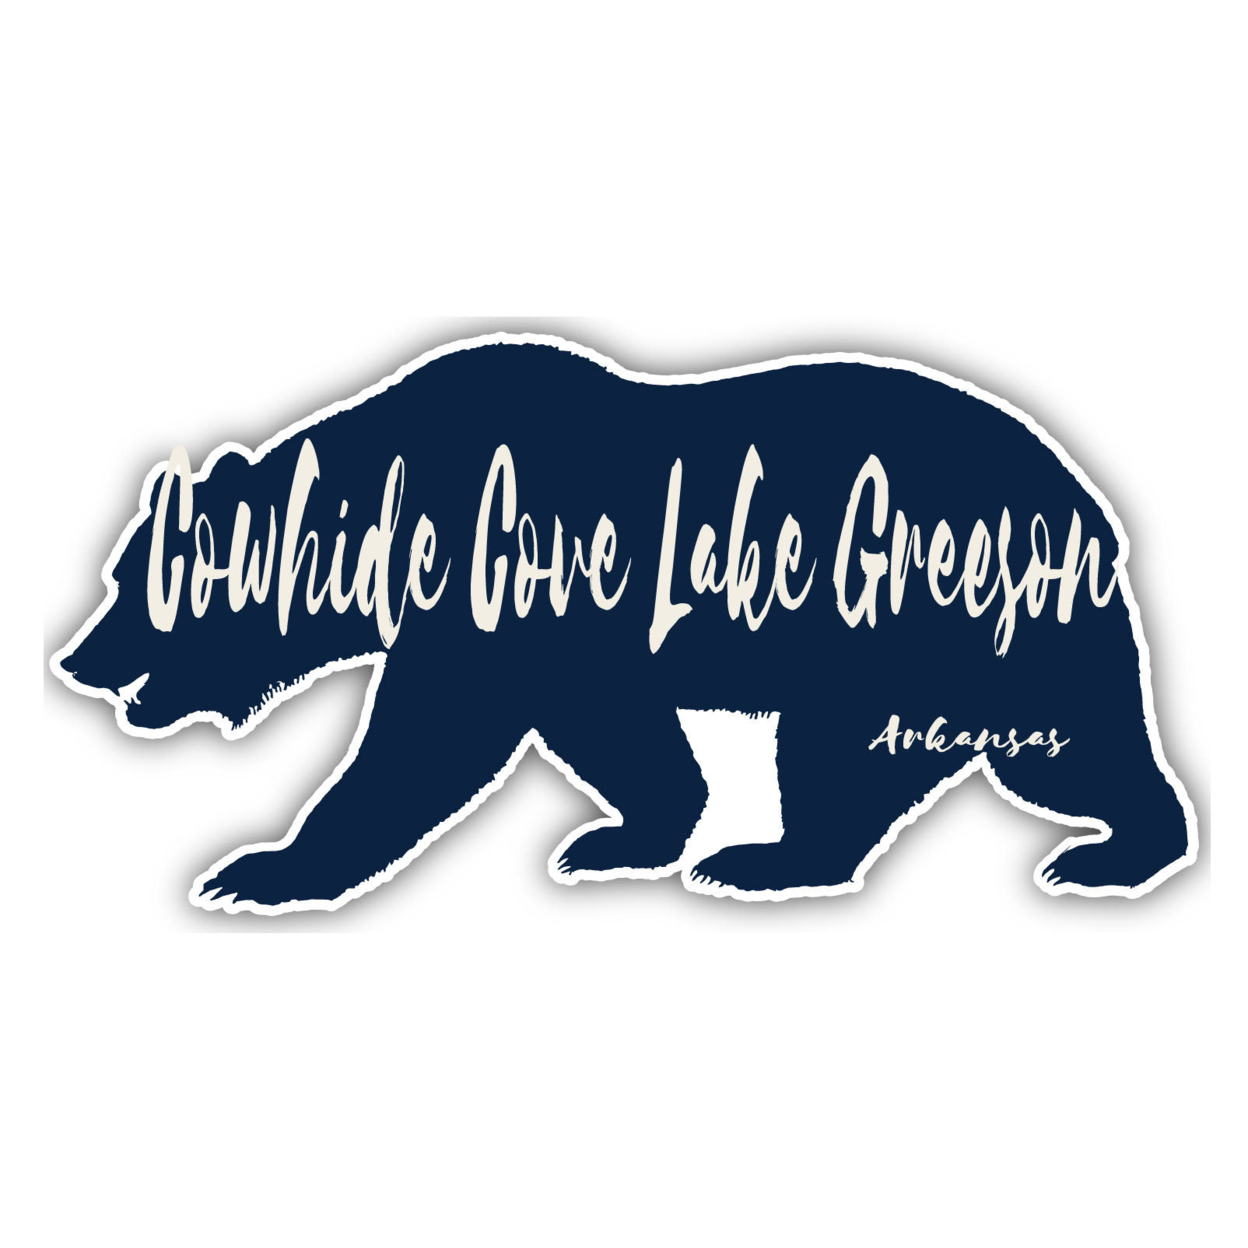 Cowhide Cove Lake Greeson Arkansas Souvenir Decorative Stickers (Choose Theme And Size) - 4-Pack, 2-Inch, Bear